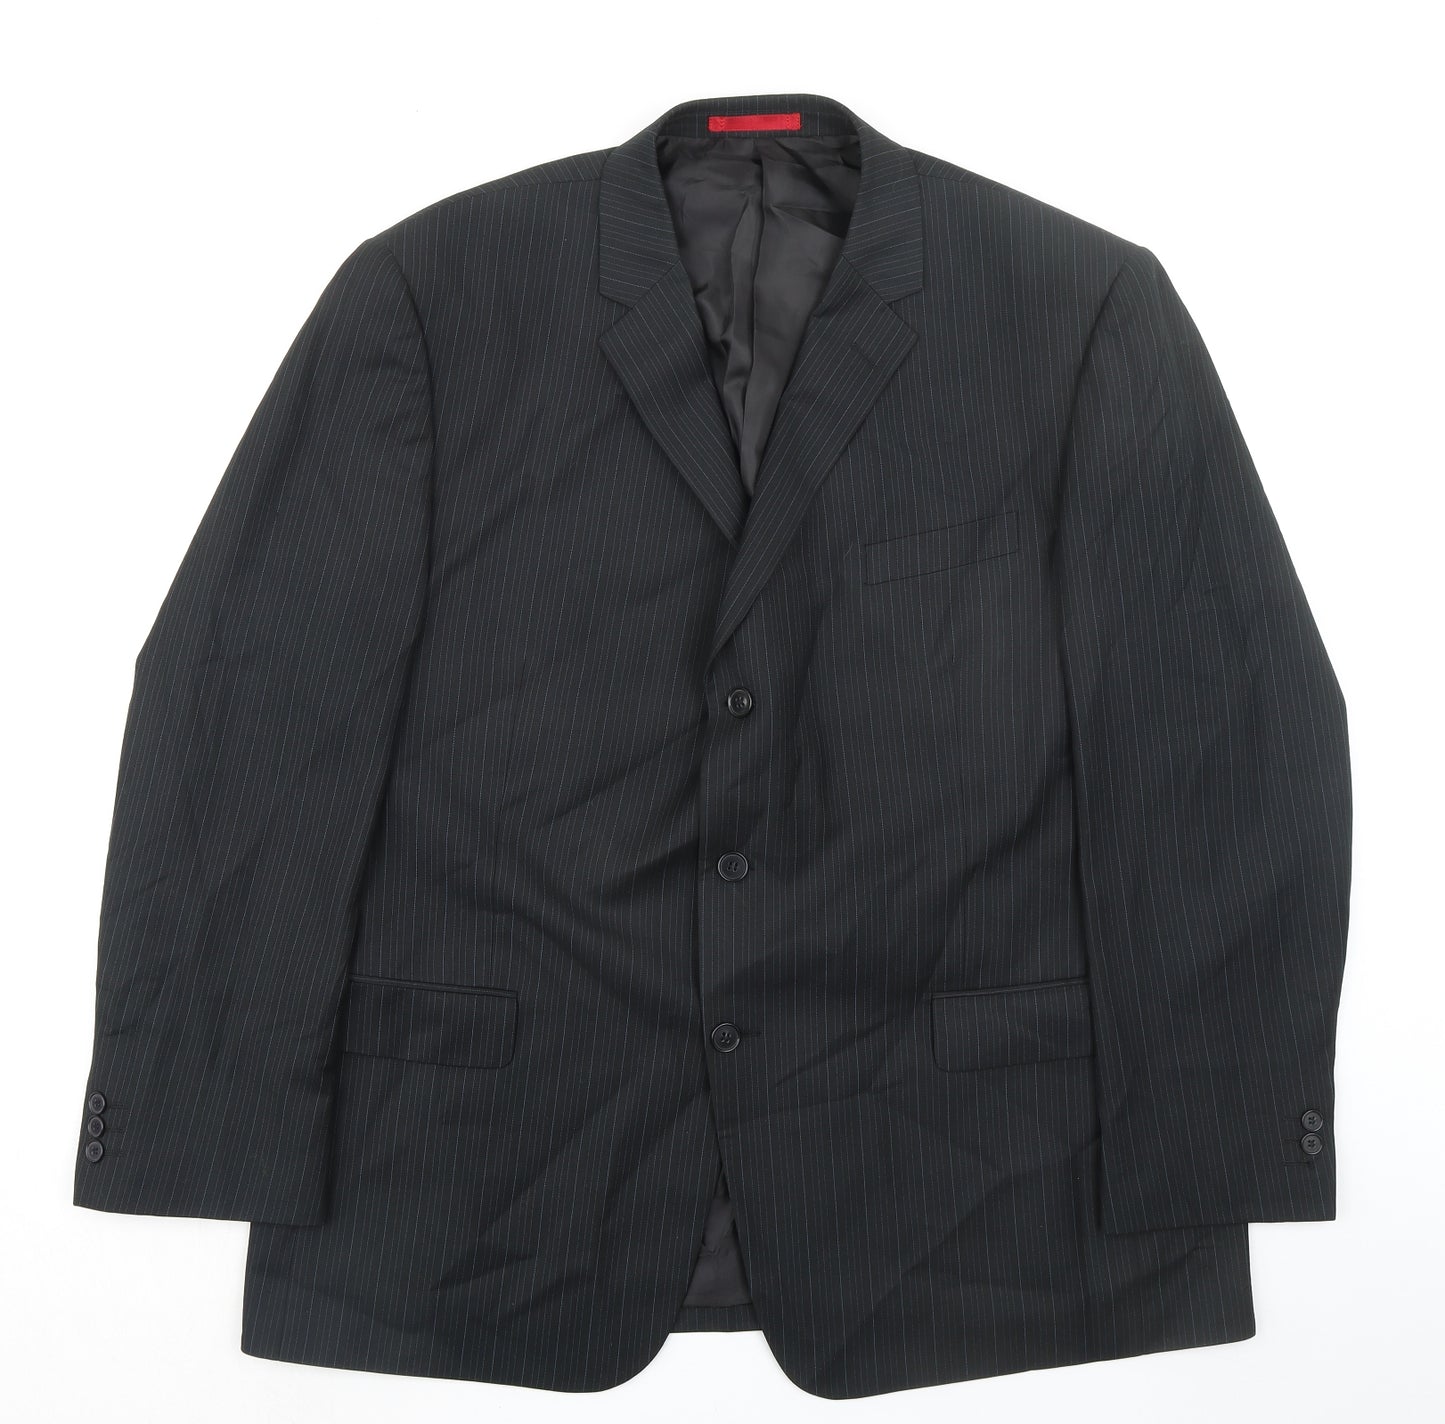 Burton Mens Black Striped Polyester Jacket Suit Jacket Size 48 Regular